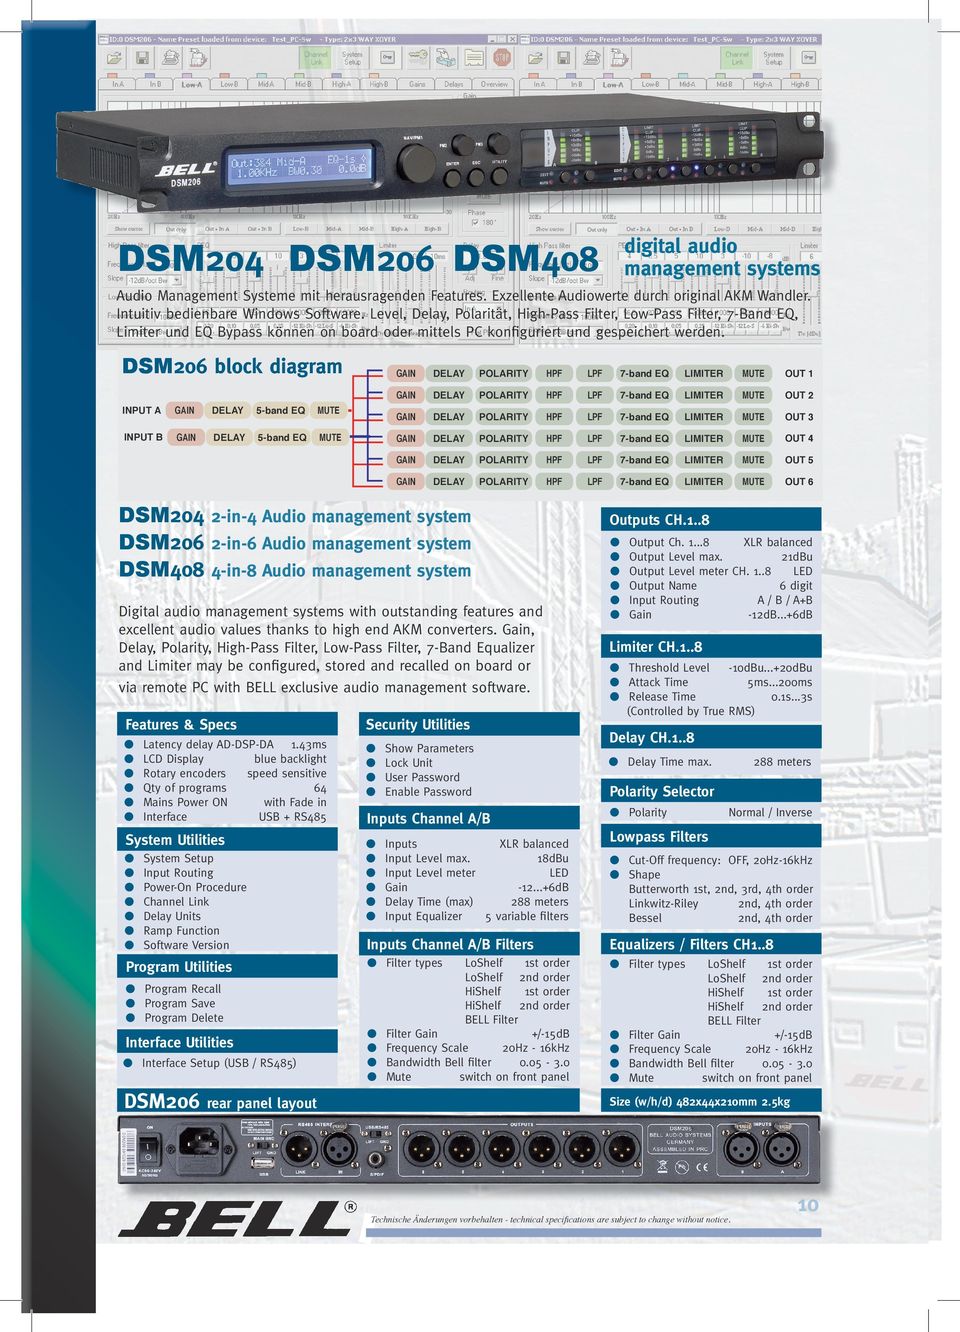 DSM206 block diagram PUT A GA 5-band EQ PUT B GA 5-band EQ GA 1 GA 2 GA 3 GA 4 GA 5 GA 6 DSM204 2-in-4 Audio management system DSM206 2-in-6 Audio management system DSM408 4-in-8 Audio management